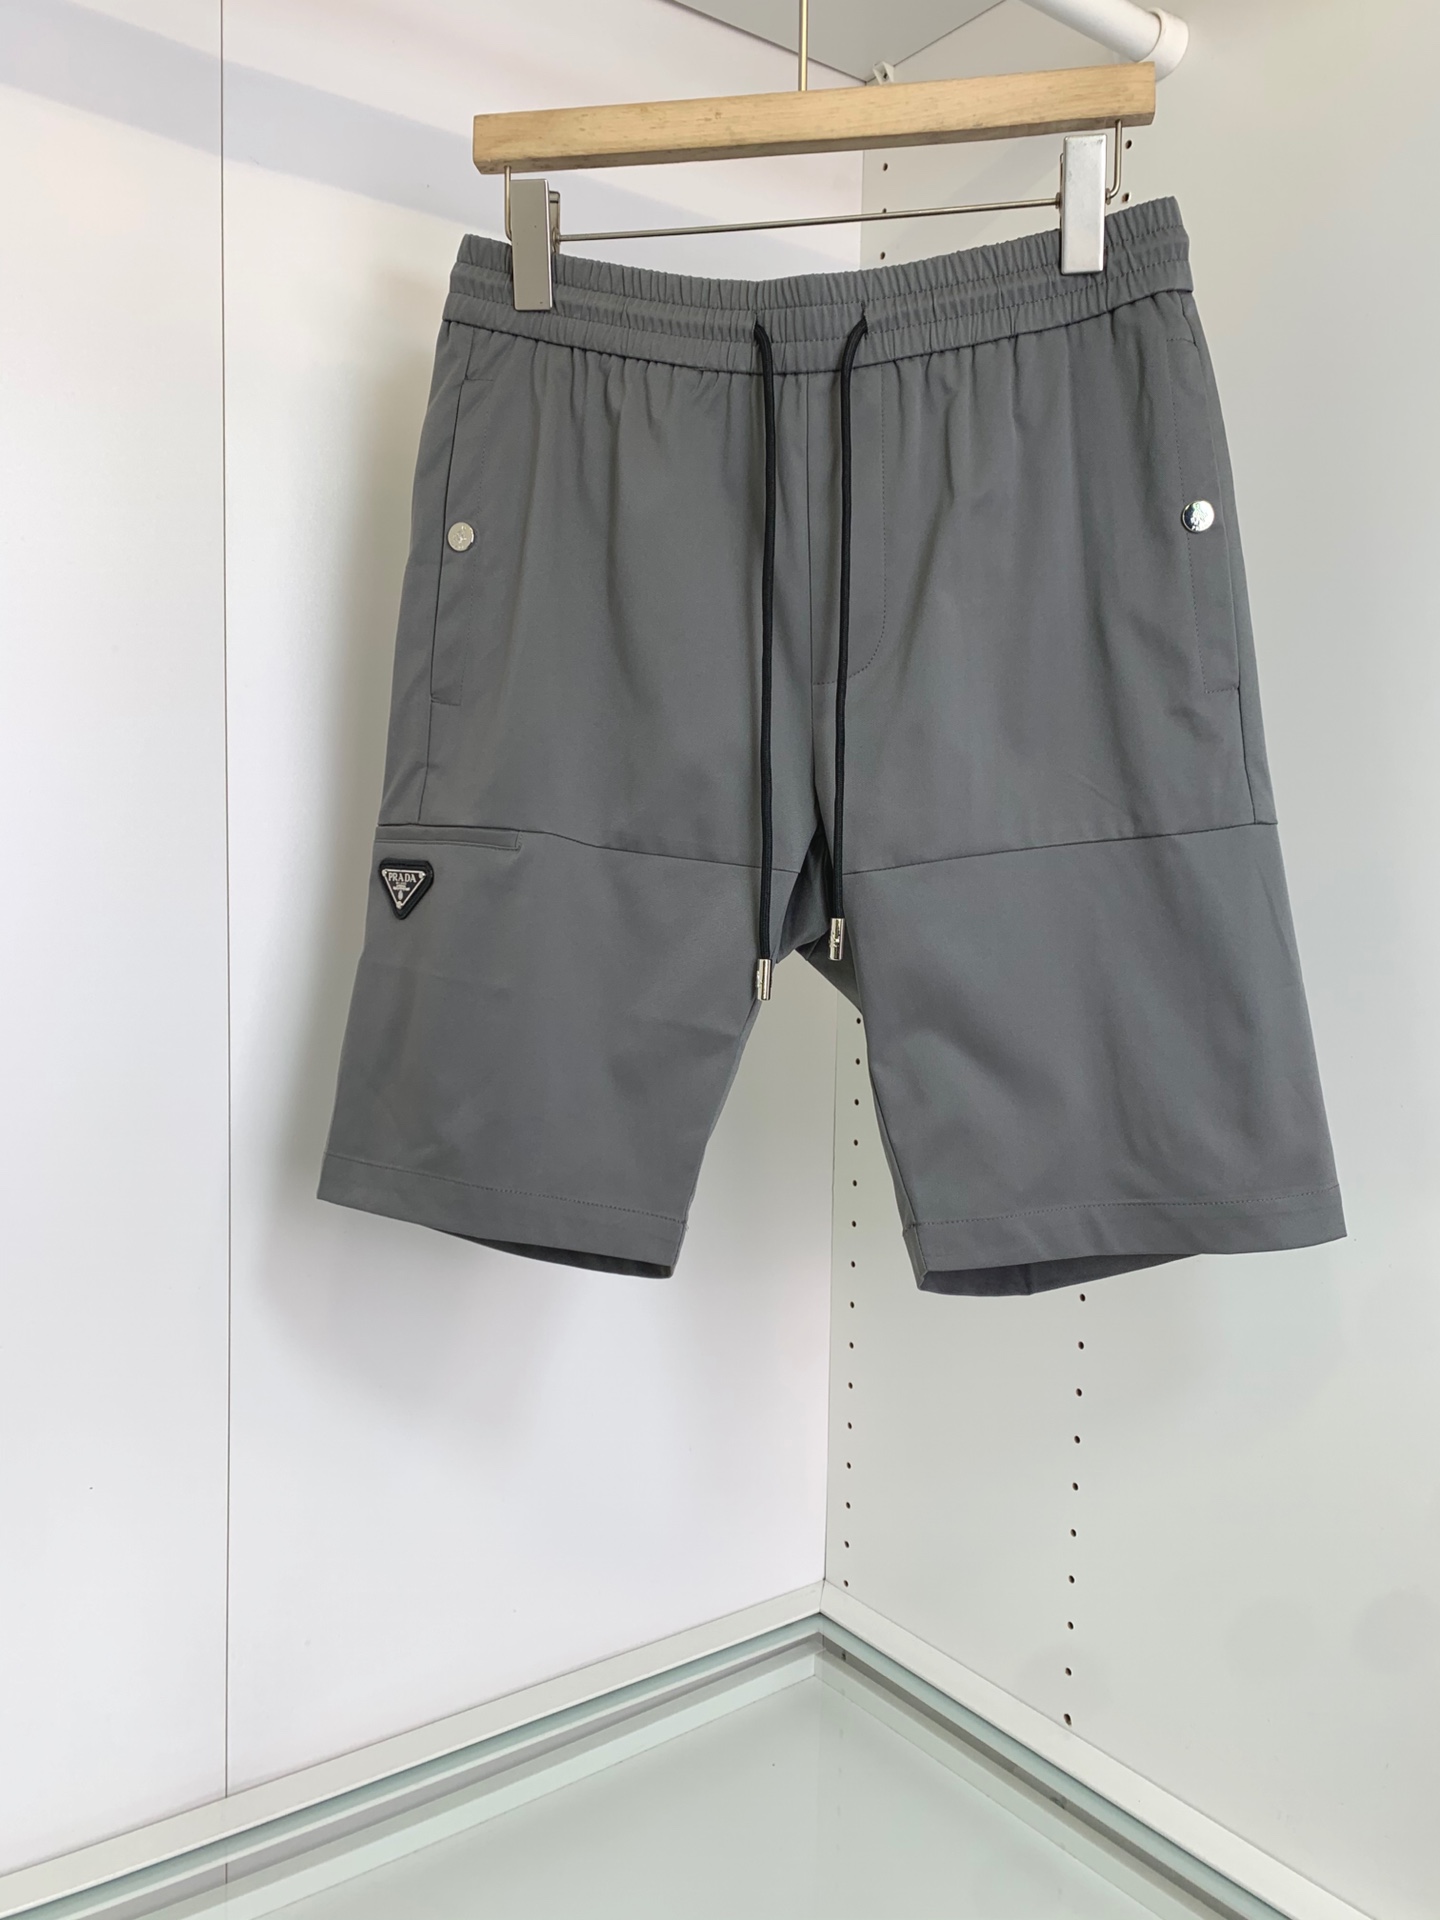 Prada Clothing Shorts Black Grey Splicing Men Cotton Spring/Summer Collection Fashion Casual